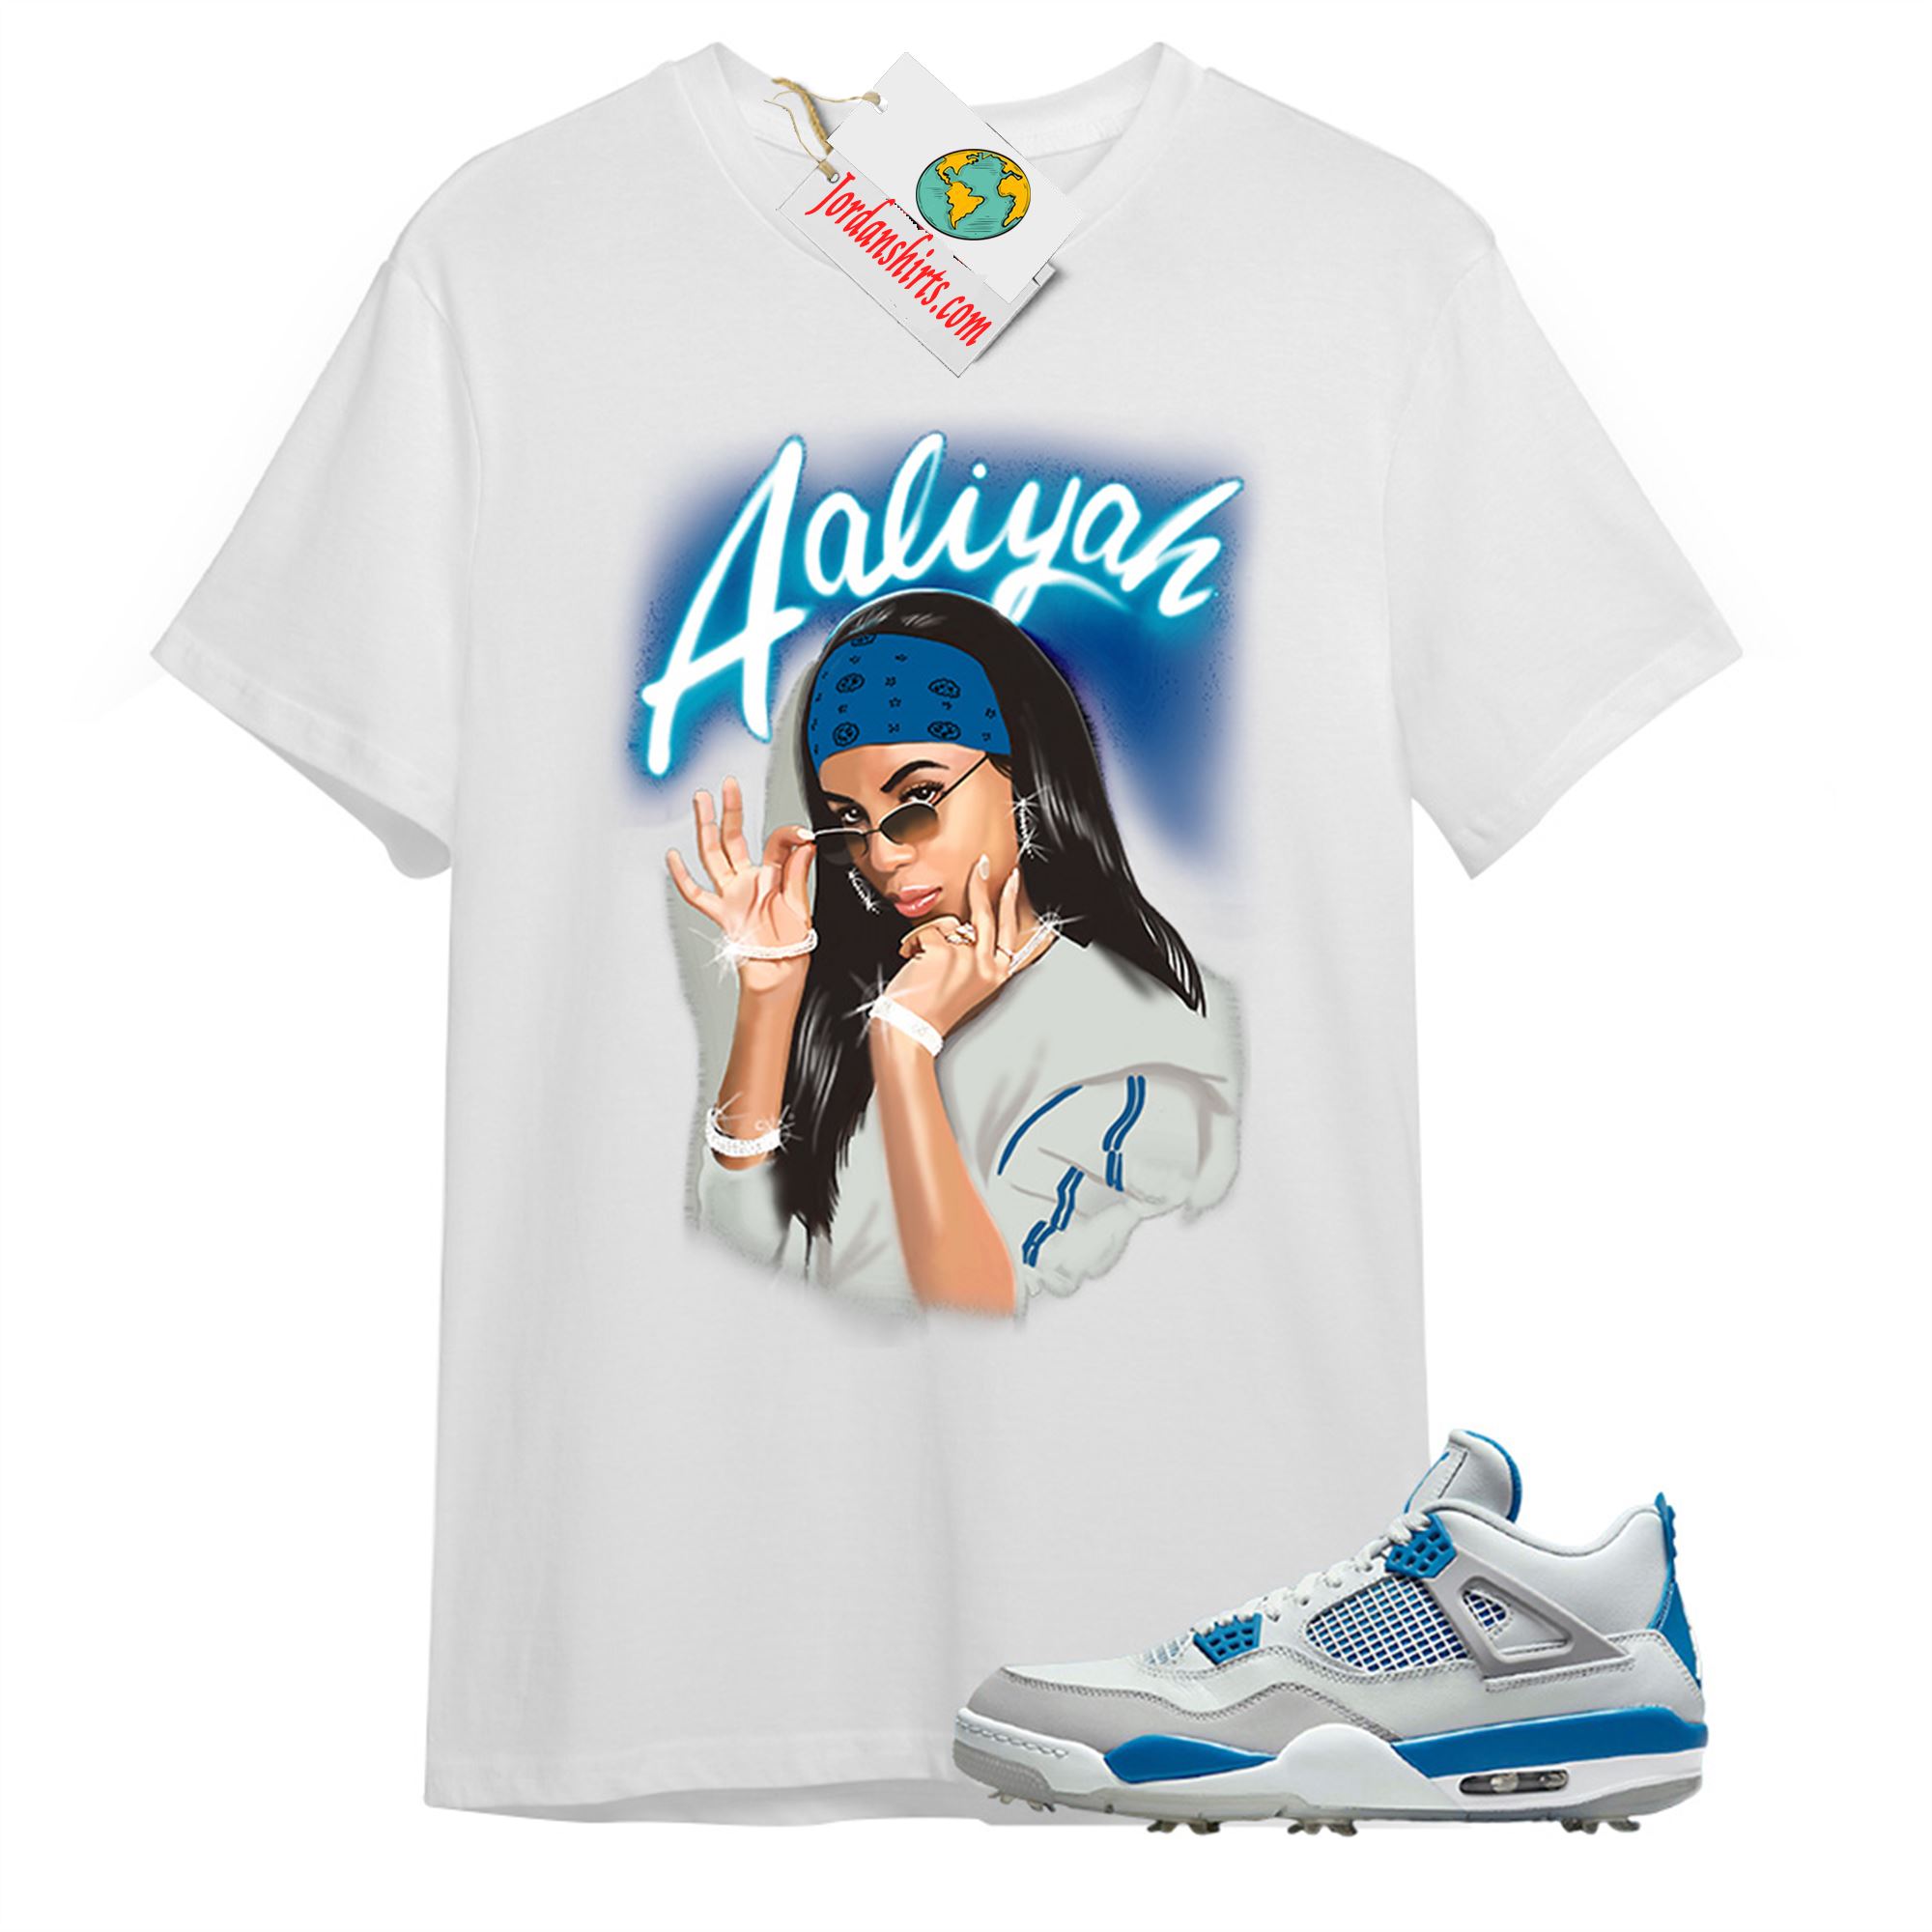 Jordan 4 Shirt, Aaliyah Airbrush White T-shirt Air Jordan 4 Golf Military Blue 4s Size Up To 5xl